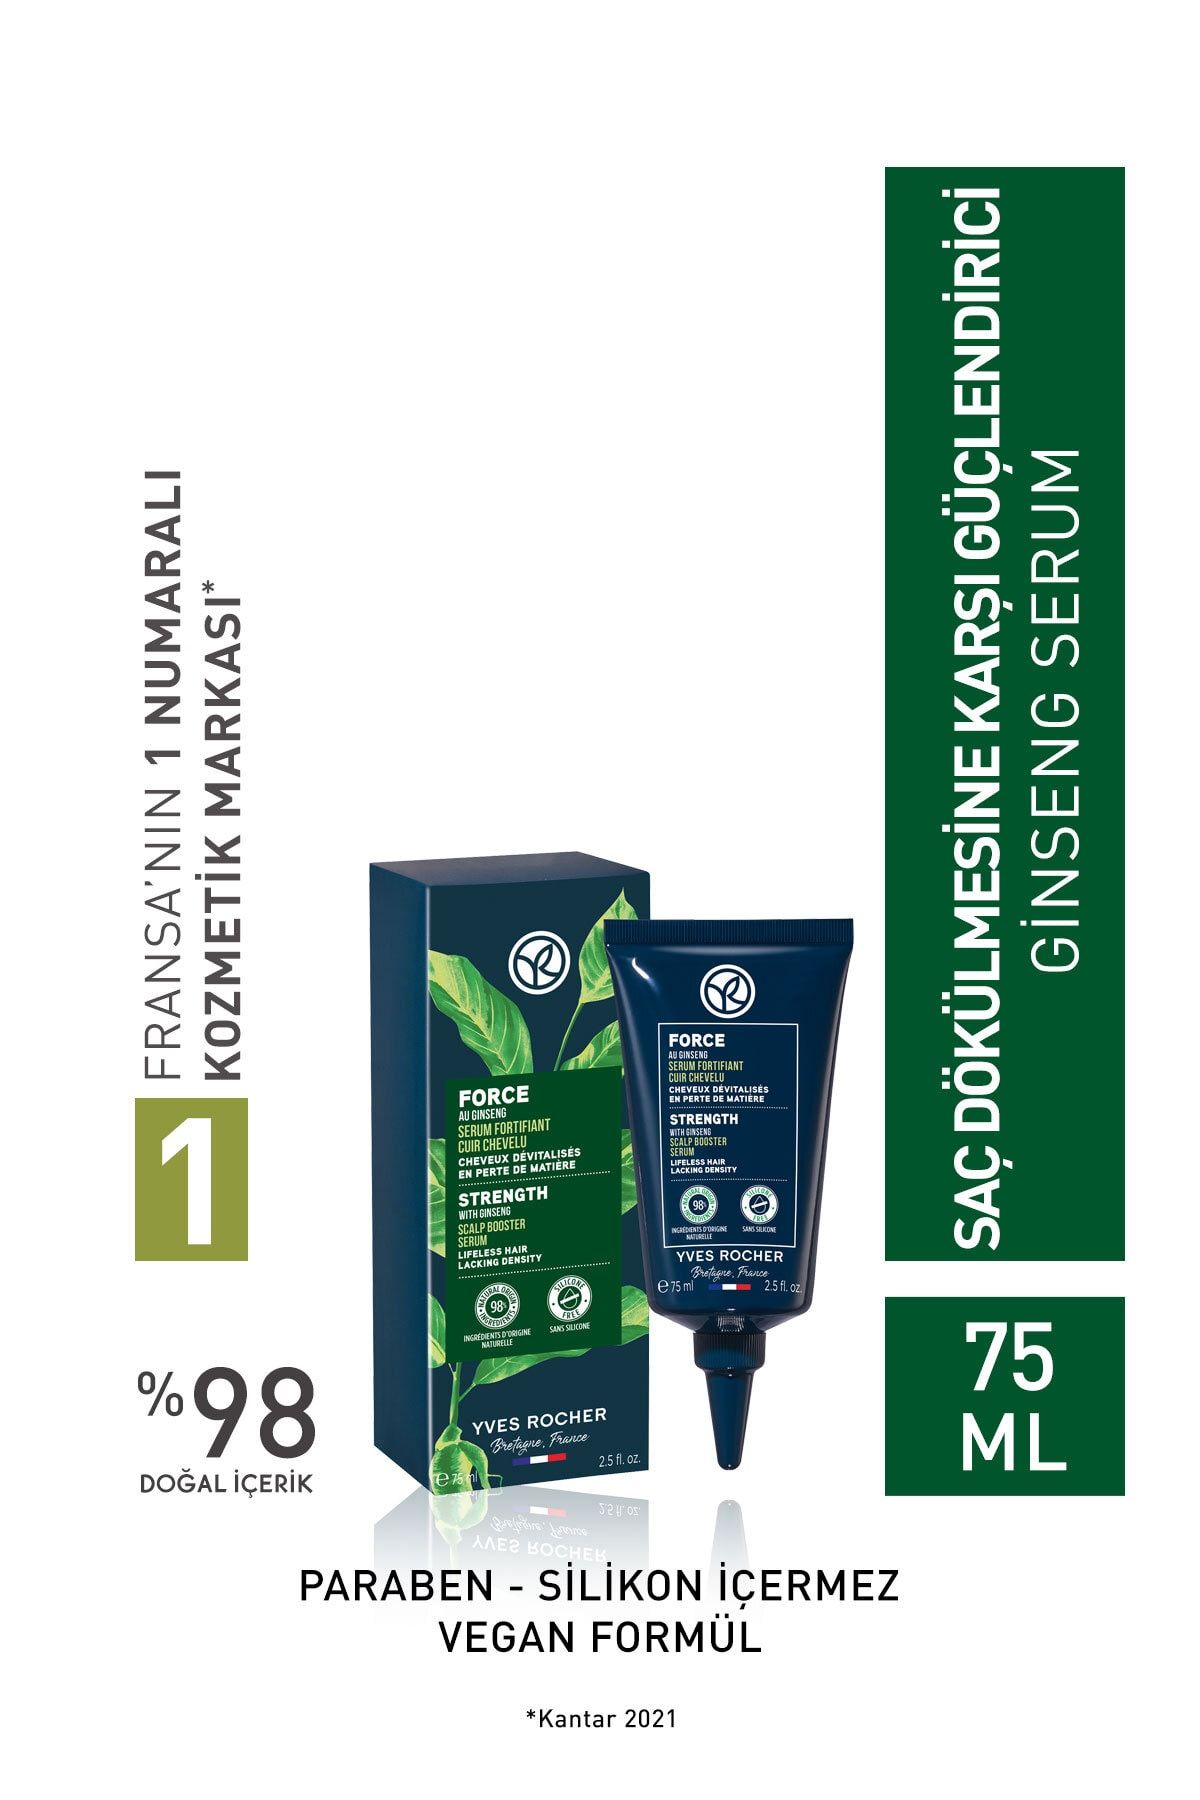 Yves Rocher Saç Dökülmesine Karşı (Anti- Chute) Güçlendirici Ginseng Serum - Vegan-75 ml